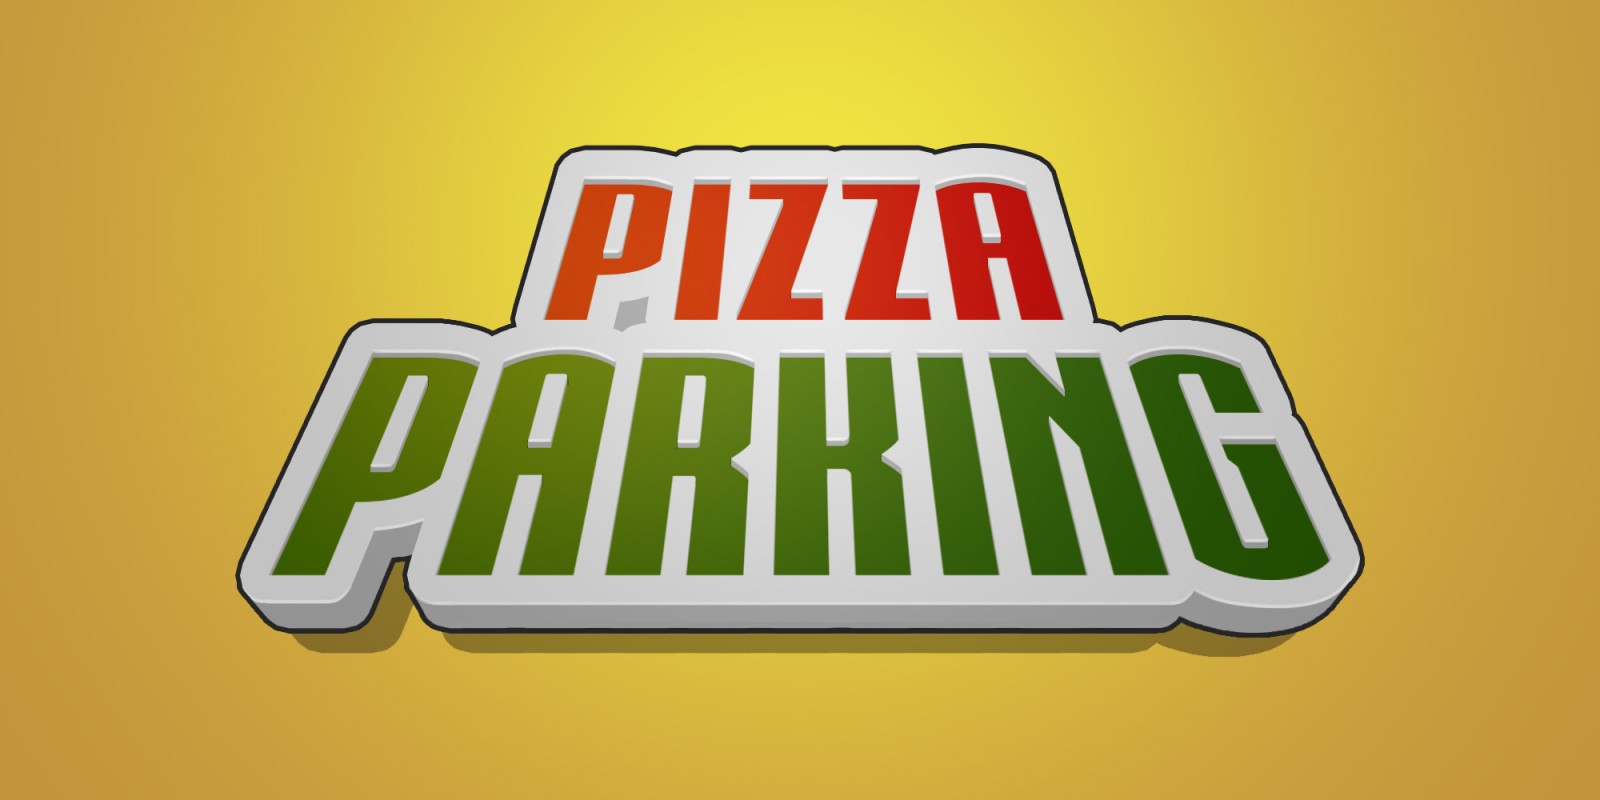 Pizza Parking